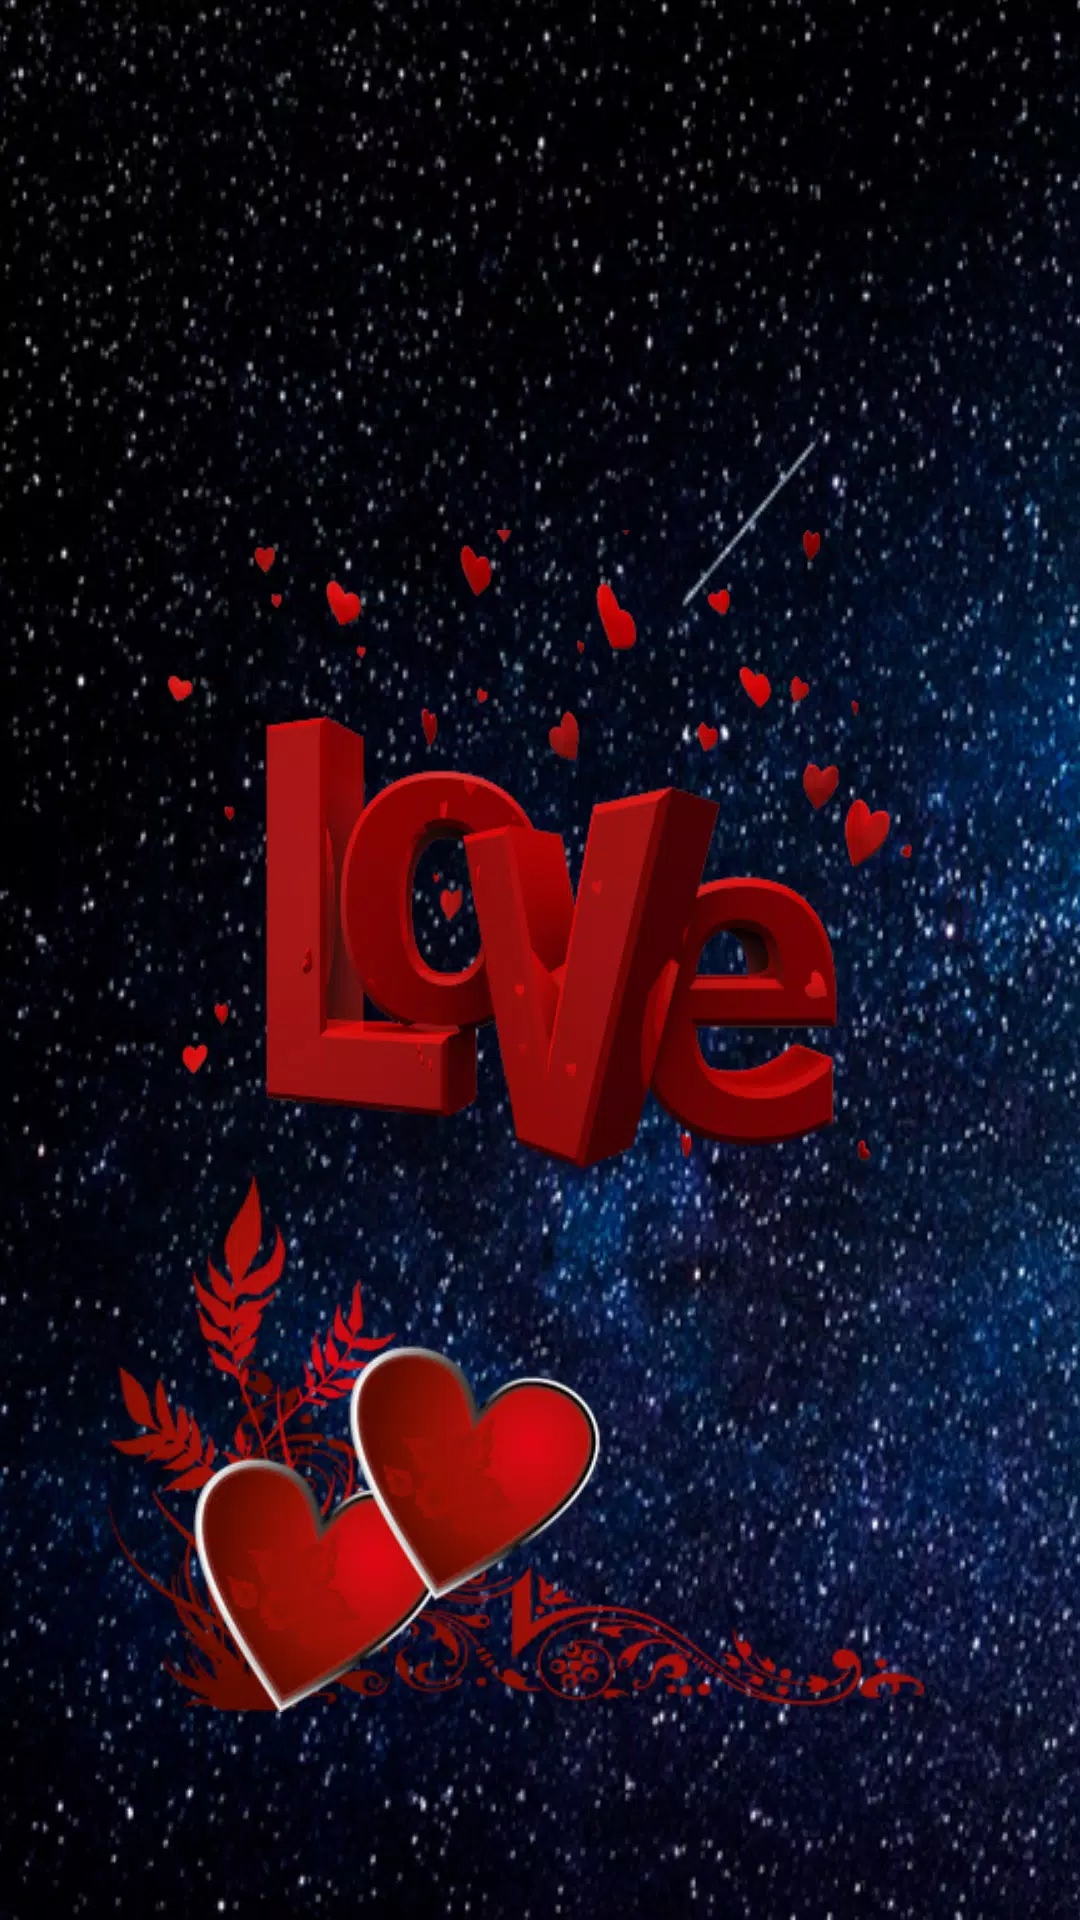 Fondos de pantalla de amor en HD gratis 2021 APK for Android Download